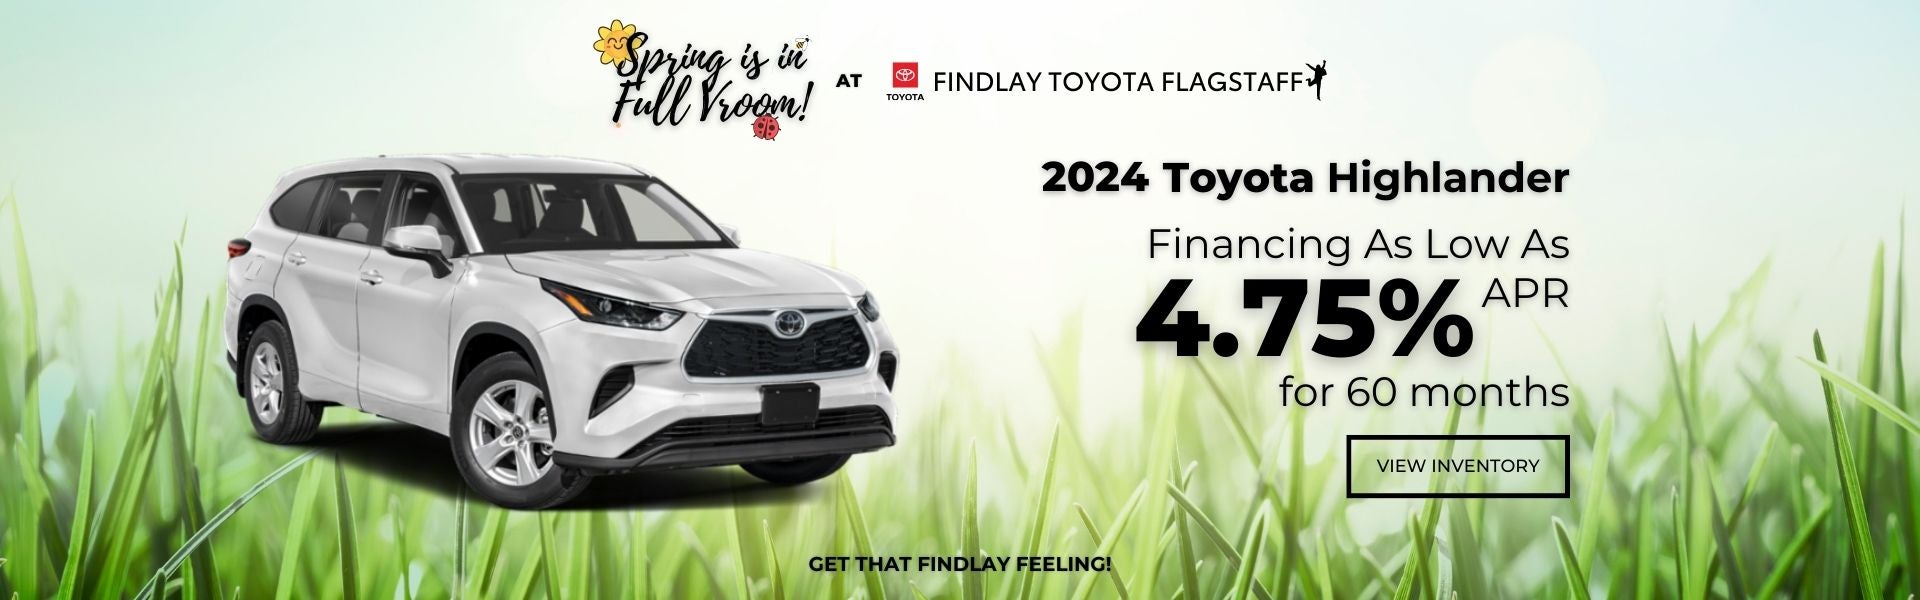 Spring is in Full Vroom at Findlay Toyota Flagstaff